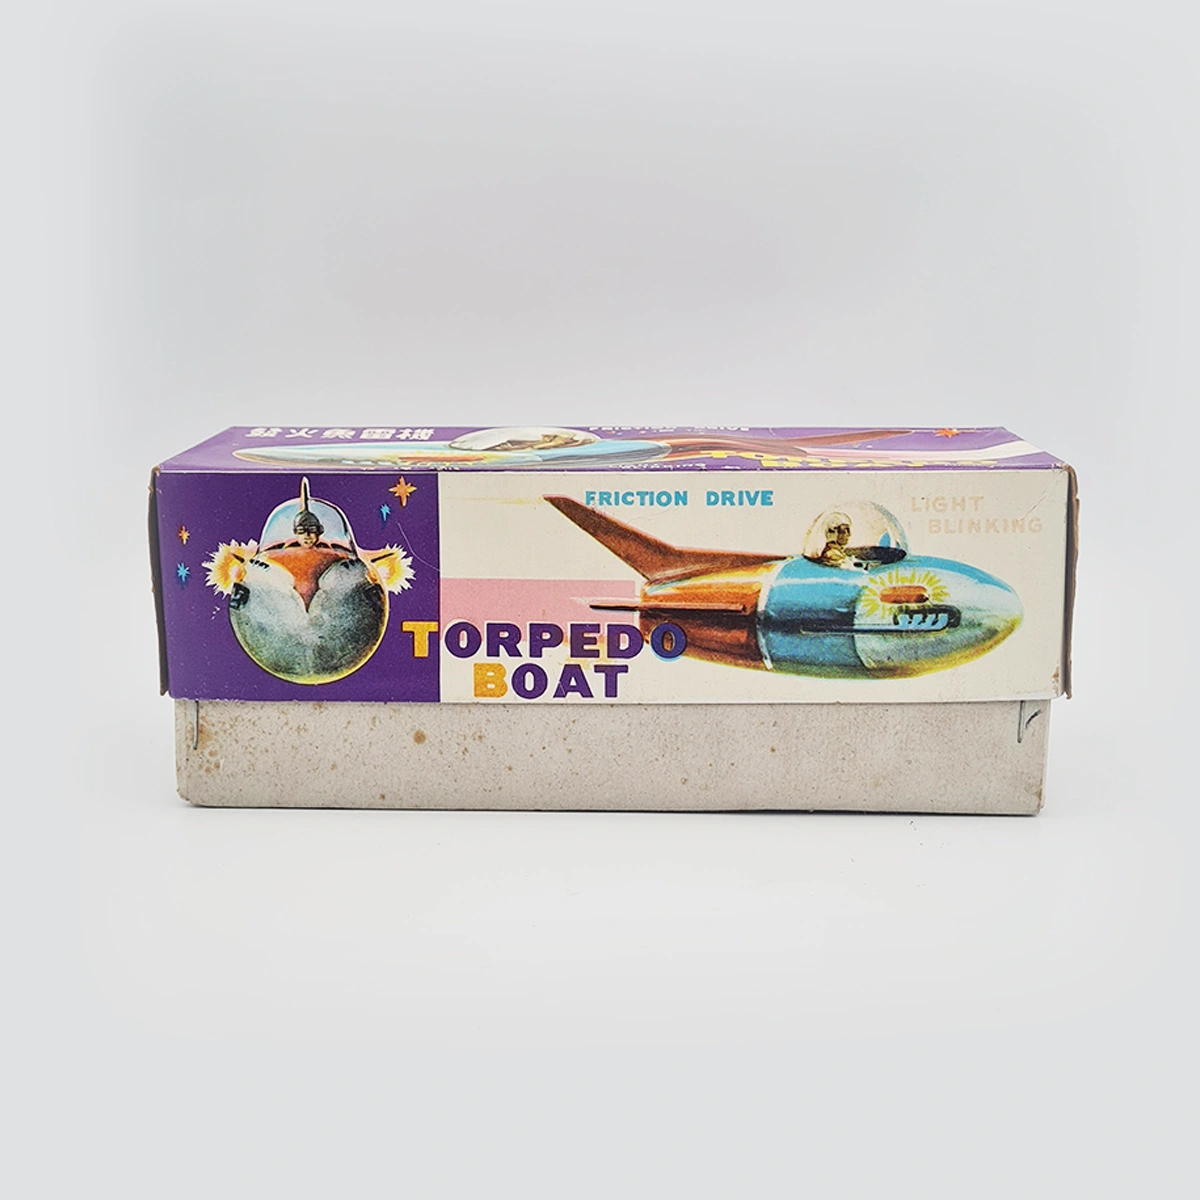 Torpedo Boat Friction Drive Tin Toy 4